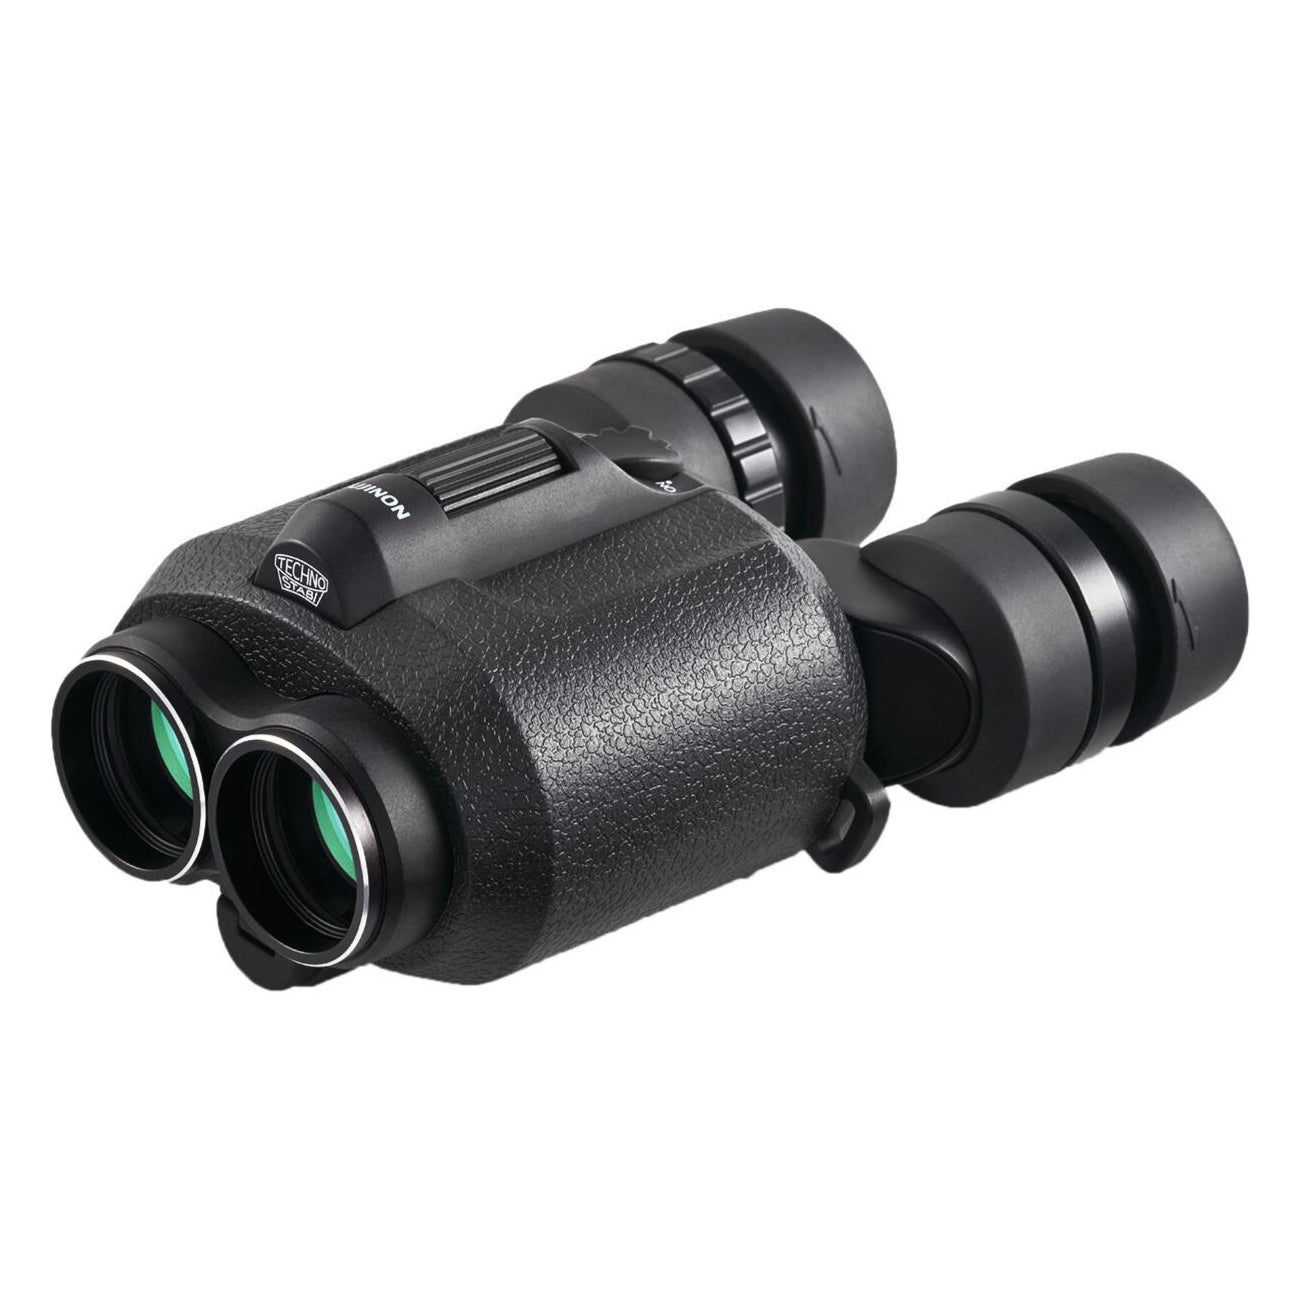 Fujinon Techno-Stabi Waterproof Image-Stabilized Binoculars